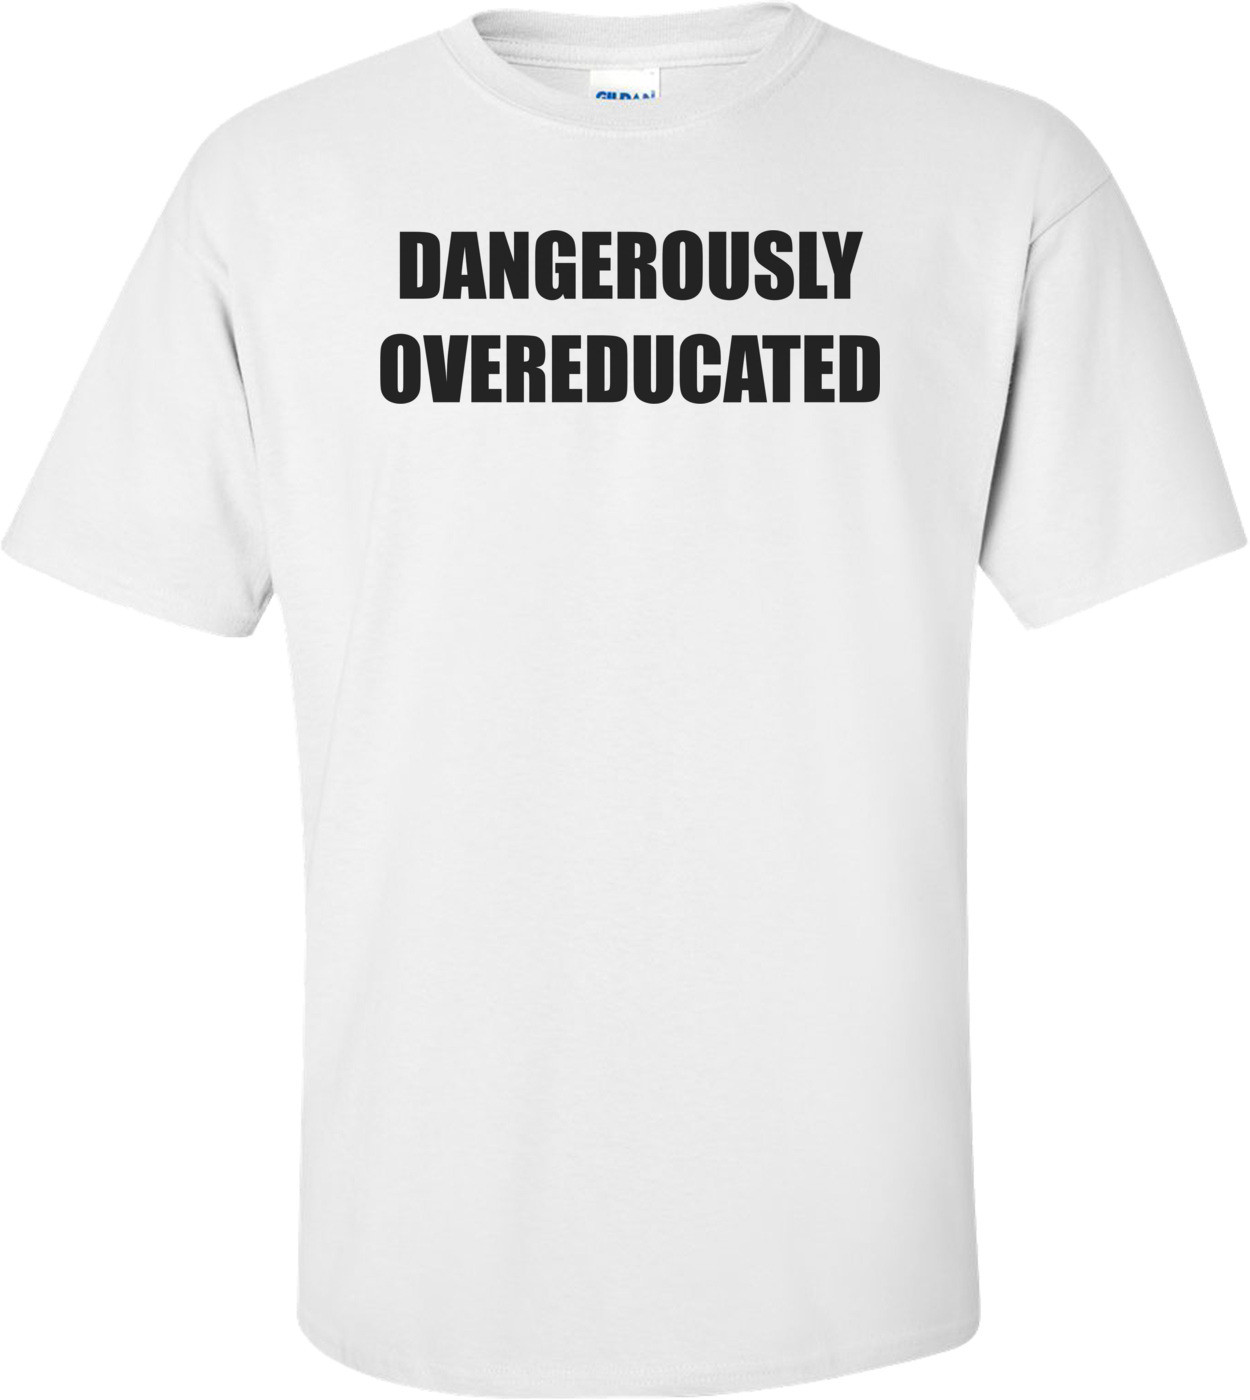 DANGEROUSLY OVEREDUCATED Shirt